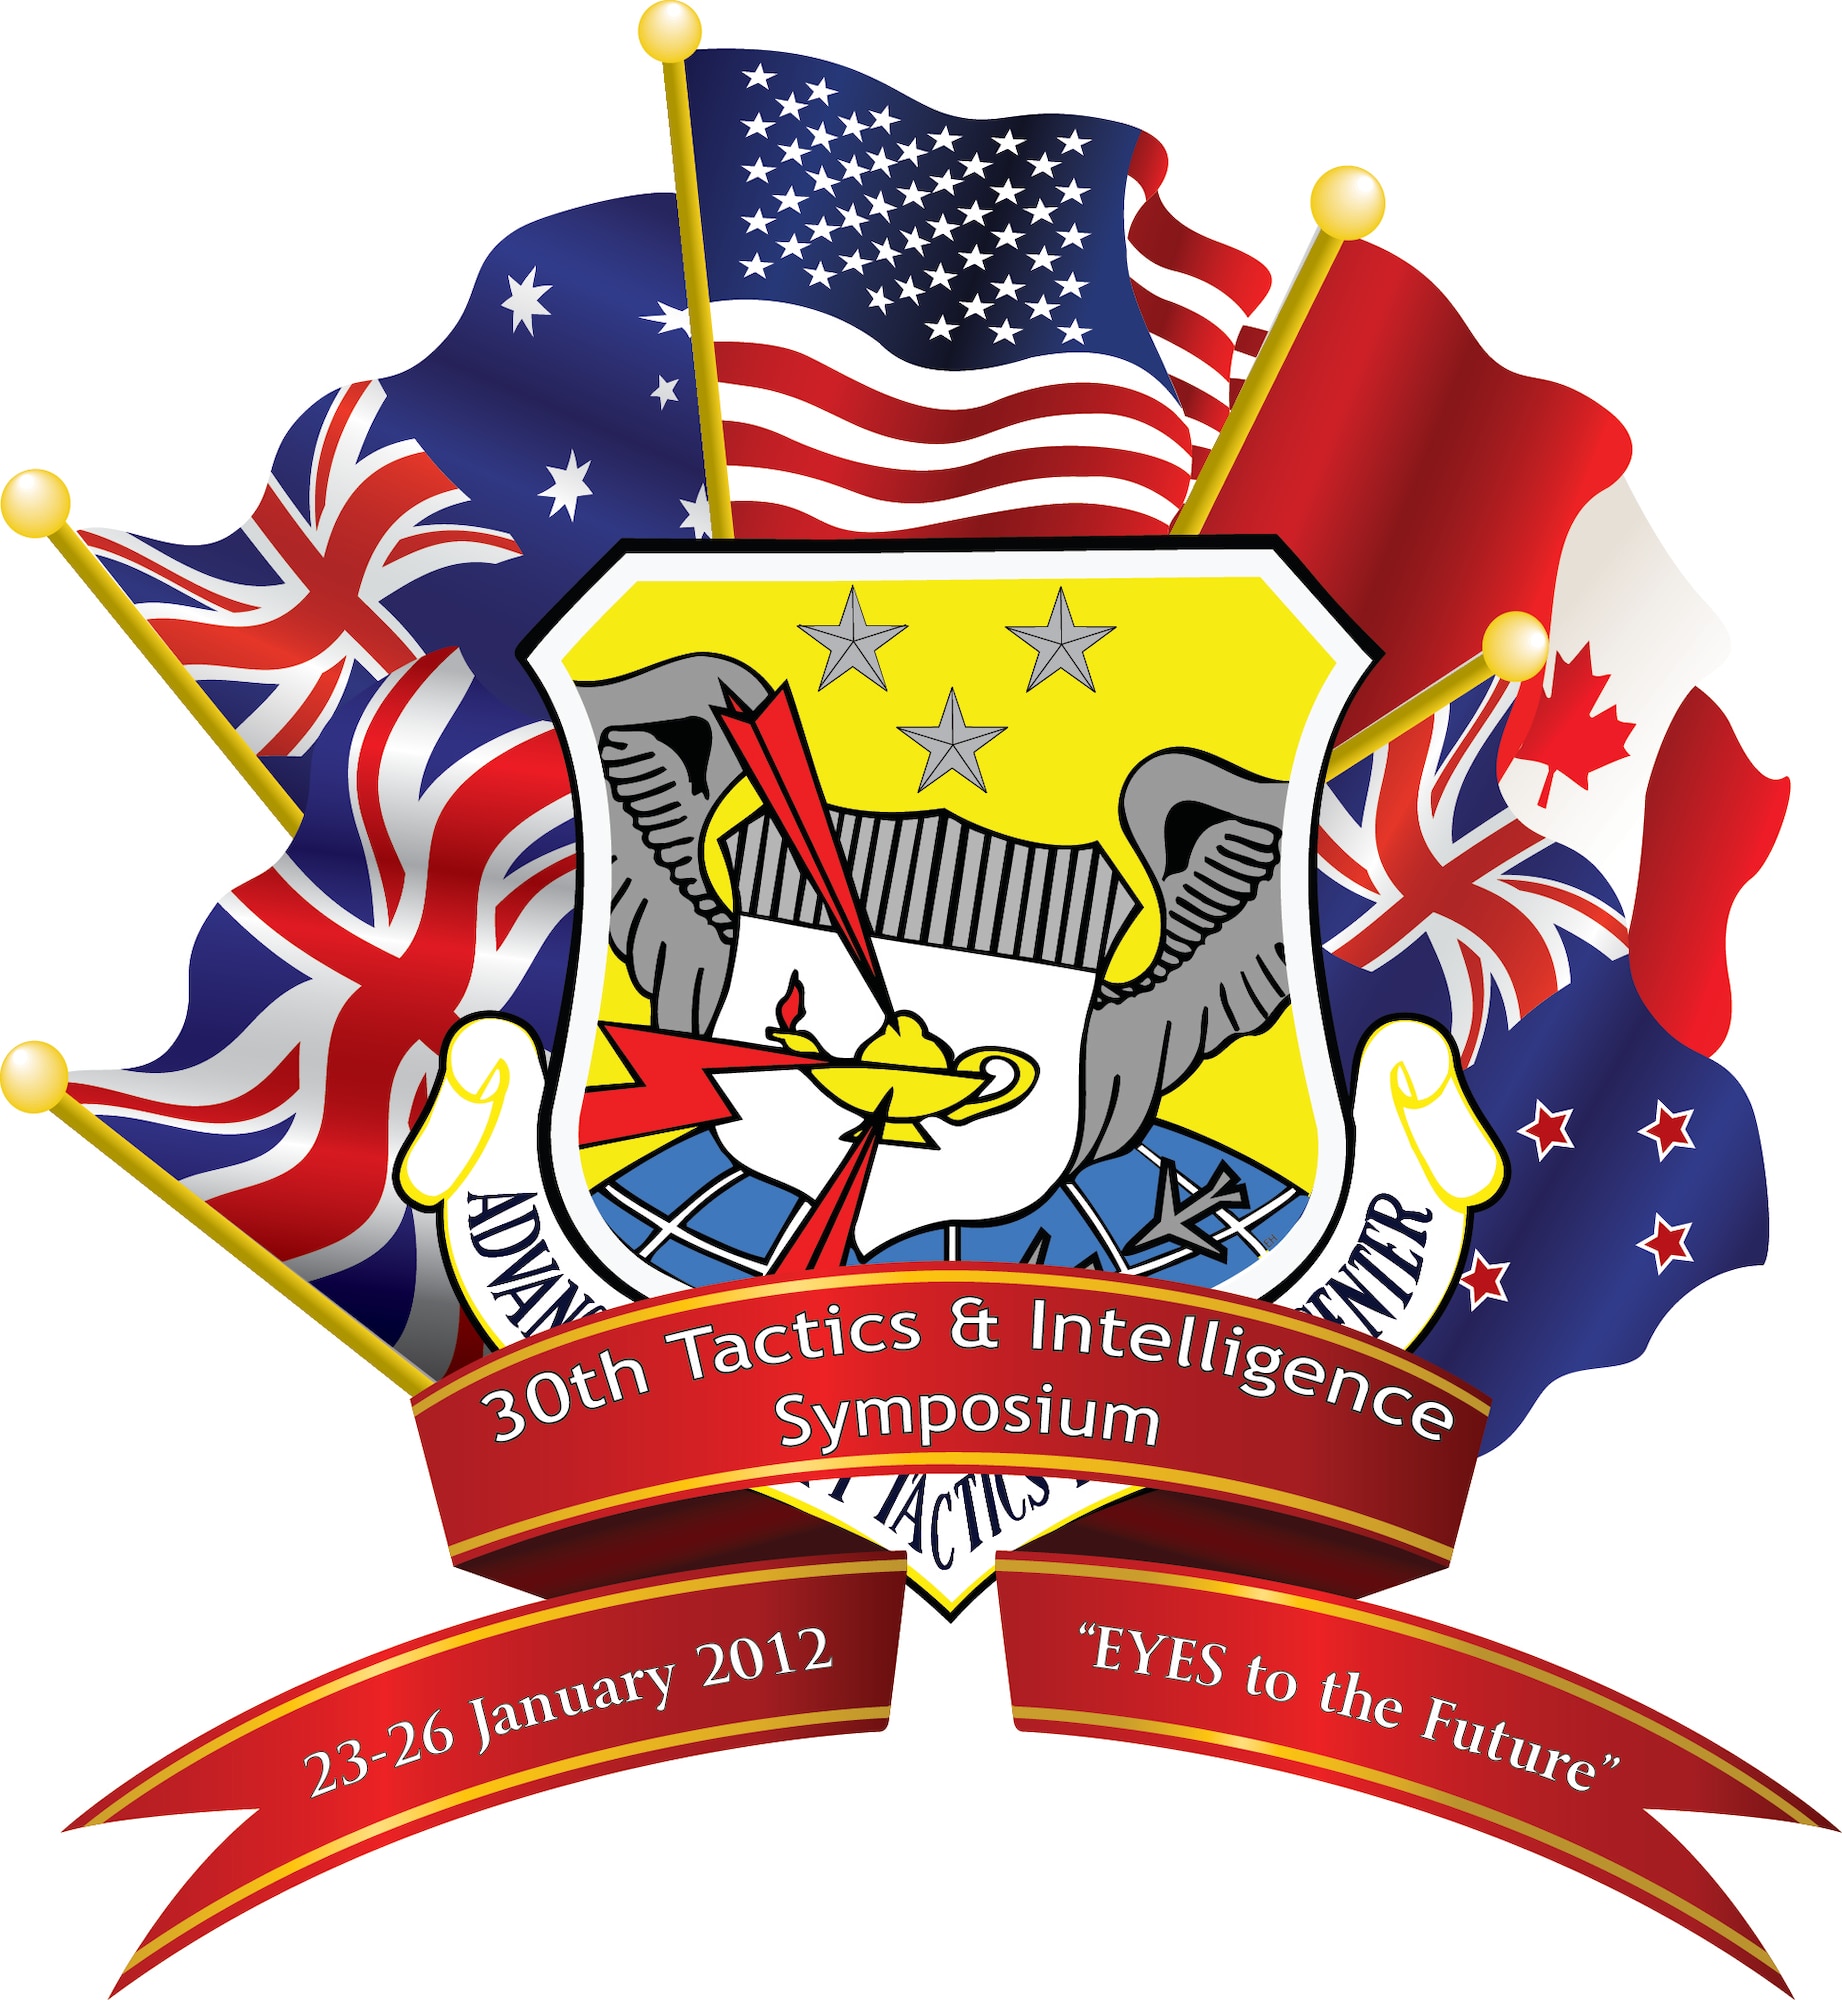 30th AATTC Tactics and Intelligence Symposium logo.